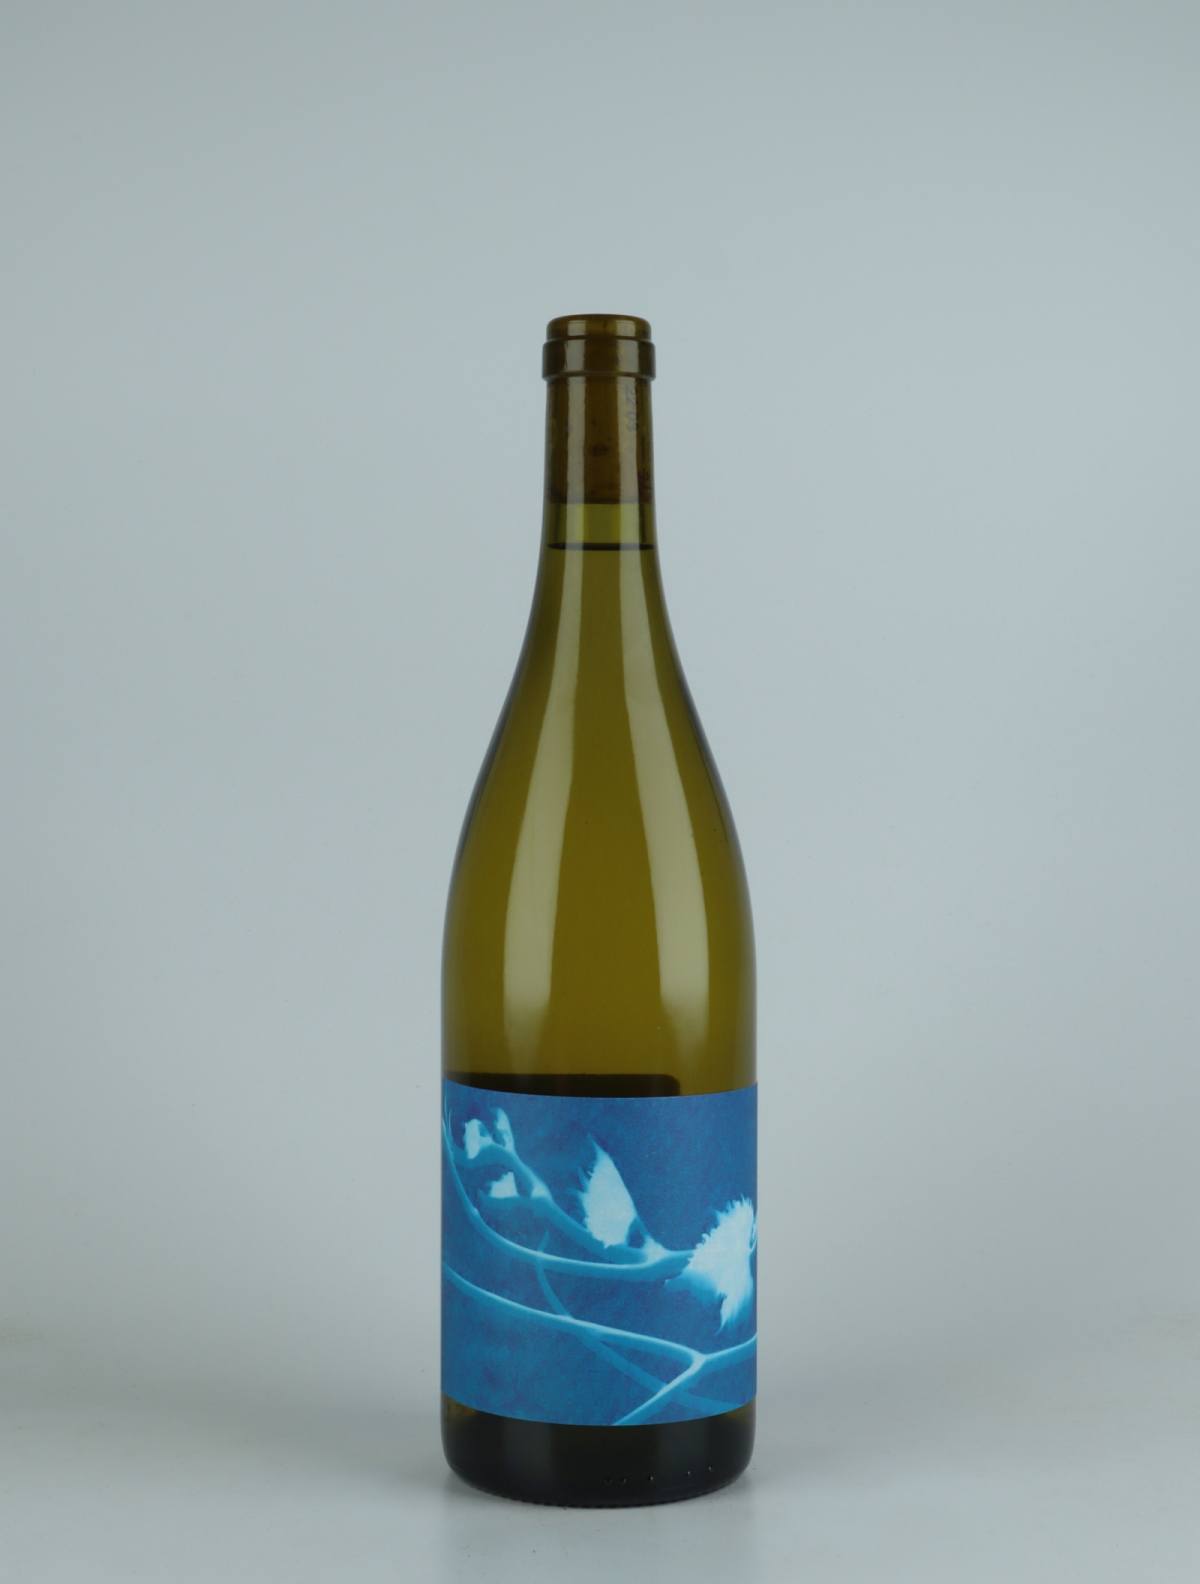 En flaske 2020 Le Rayon Blanc Hvidvin fra Thomas Puéchavy, Loire i Frankrig